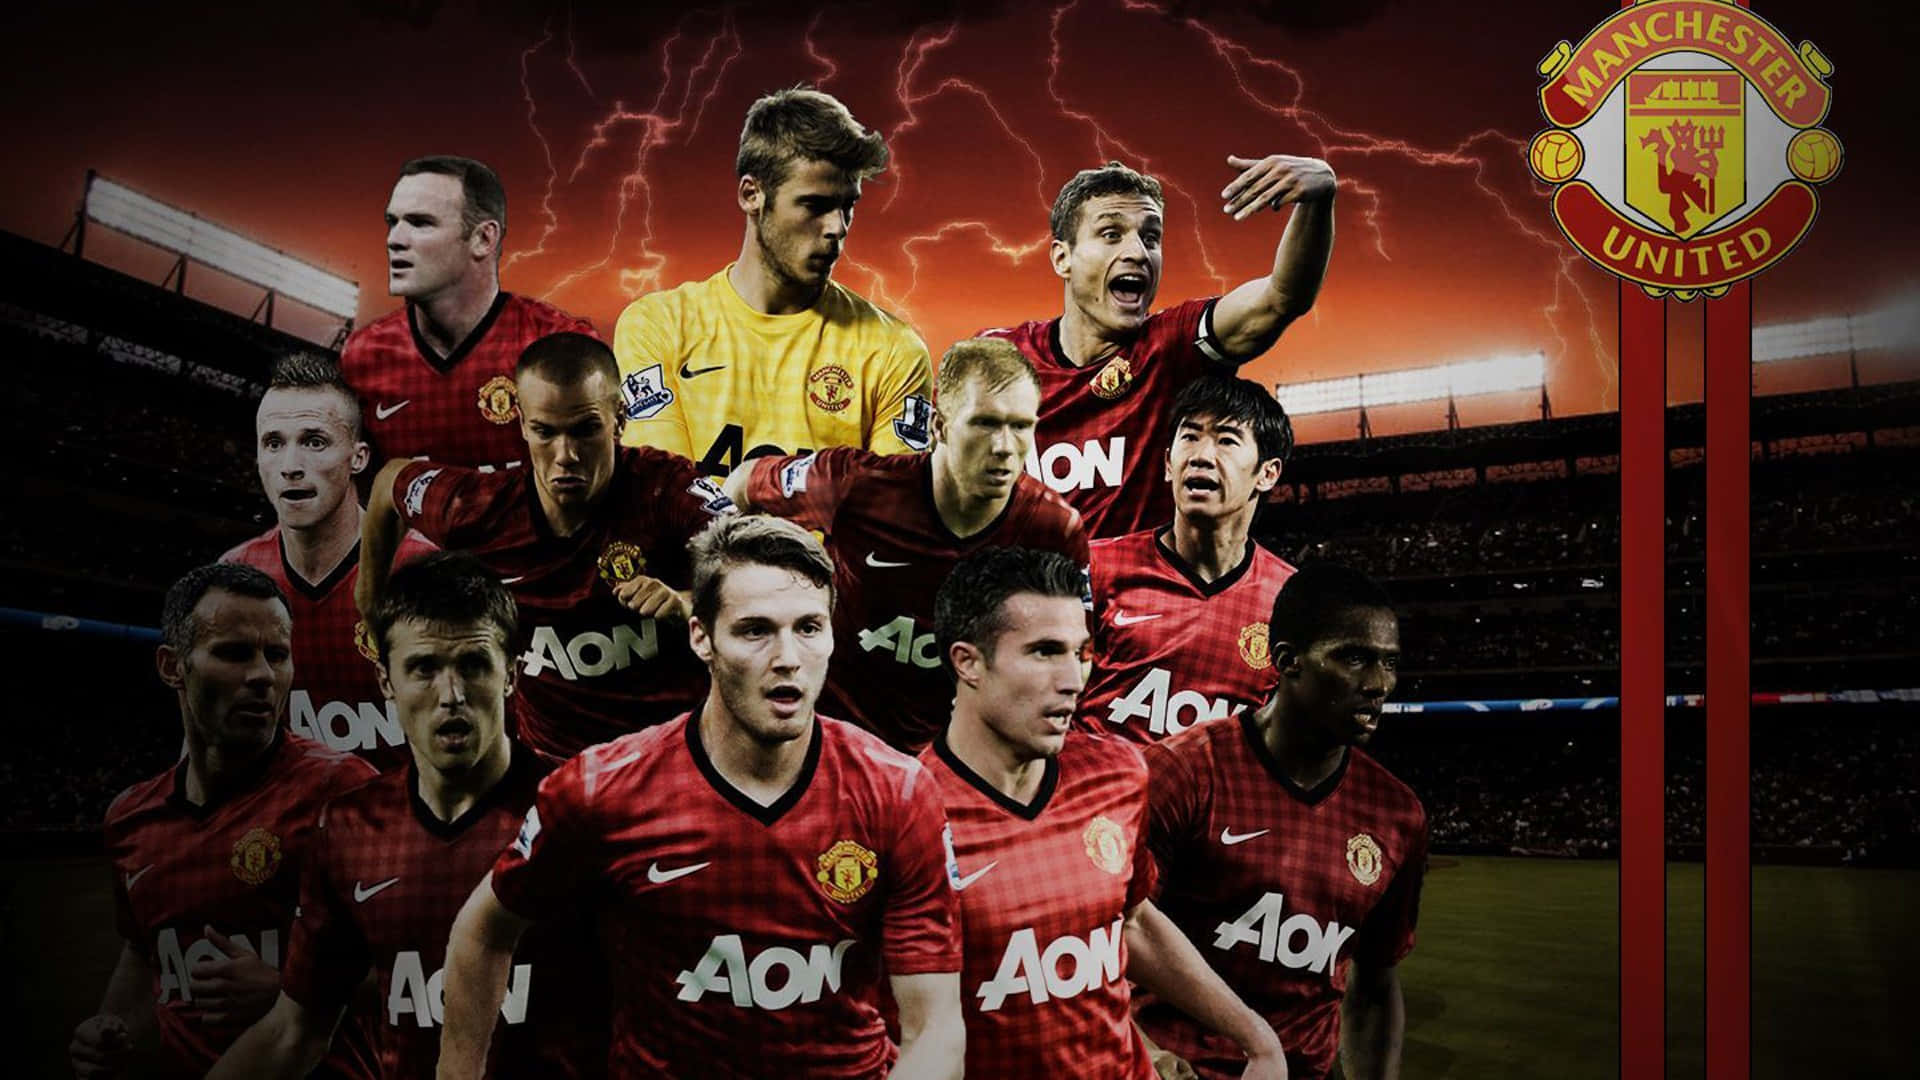 Det Manchester United-hold - Klar til Premier League-titlen. Wallpaper